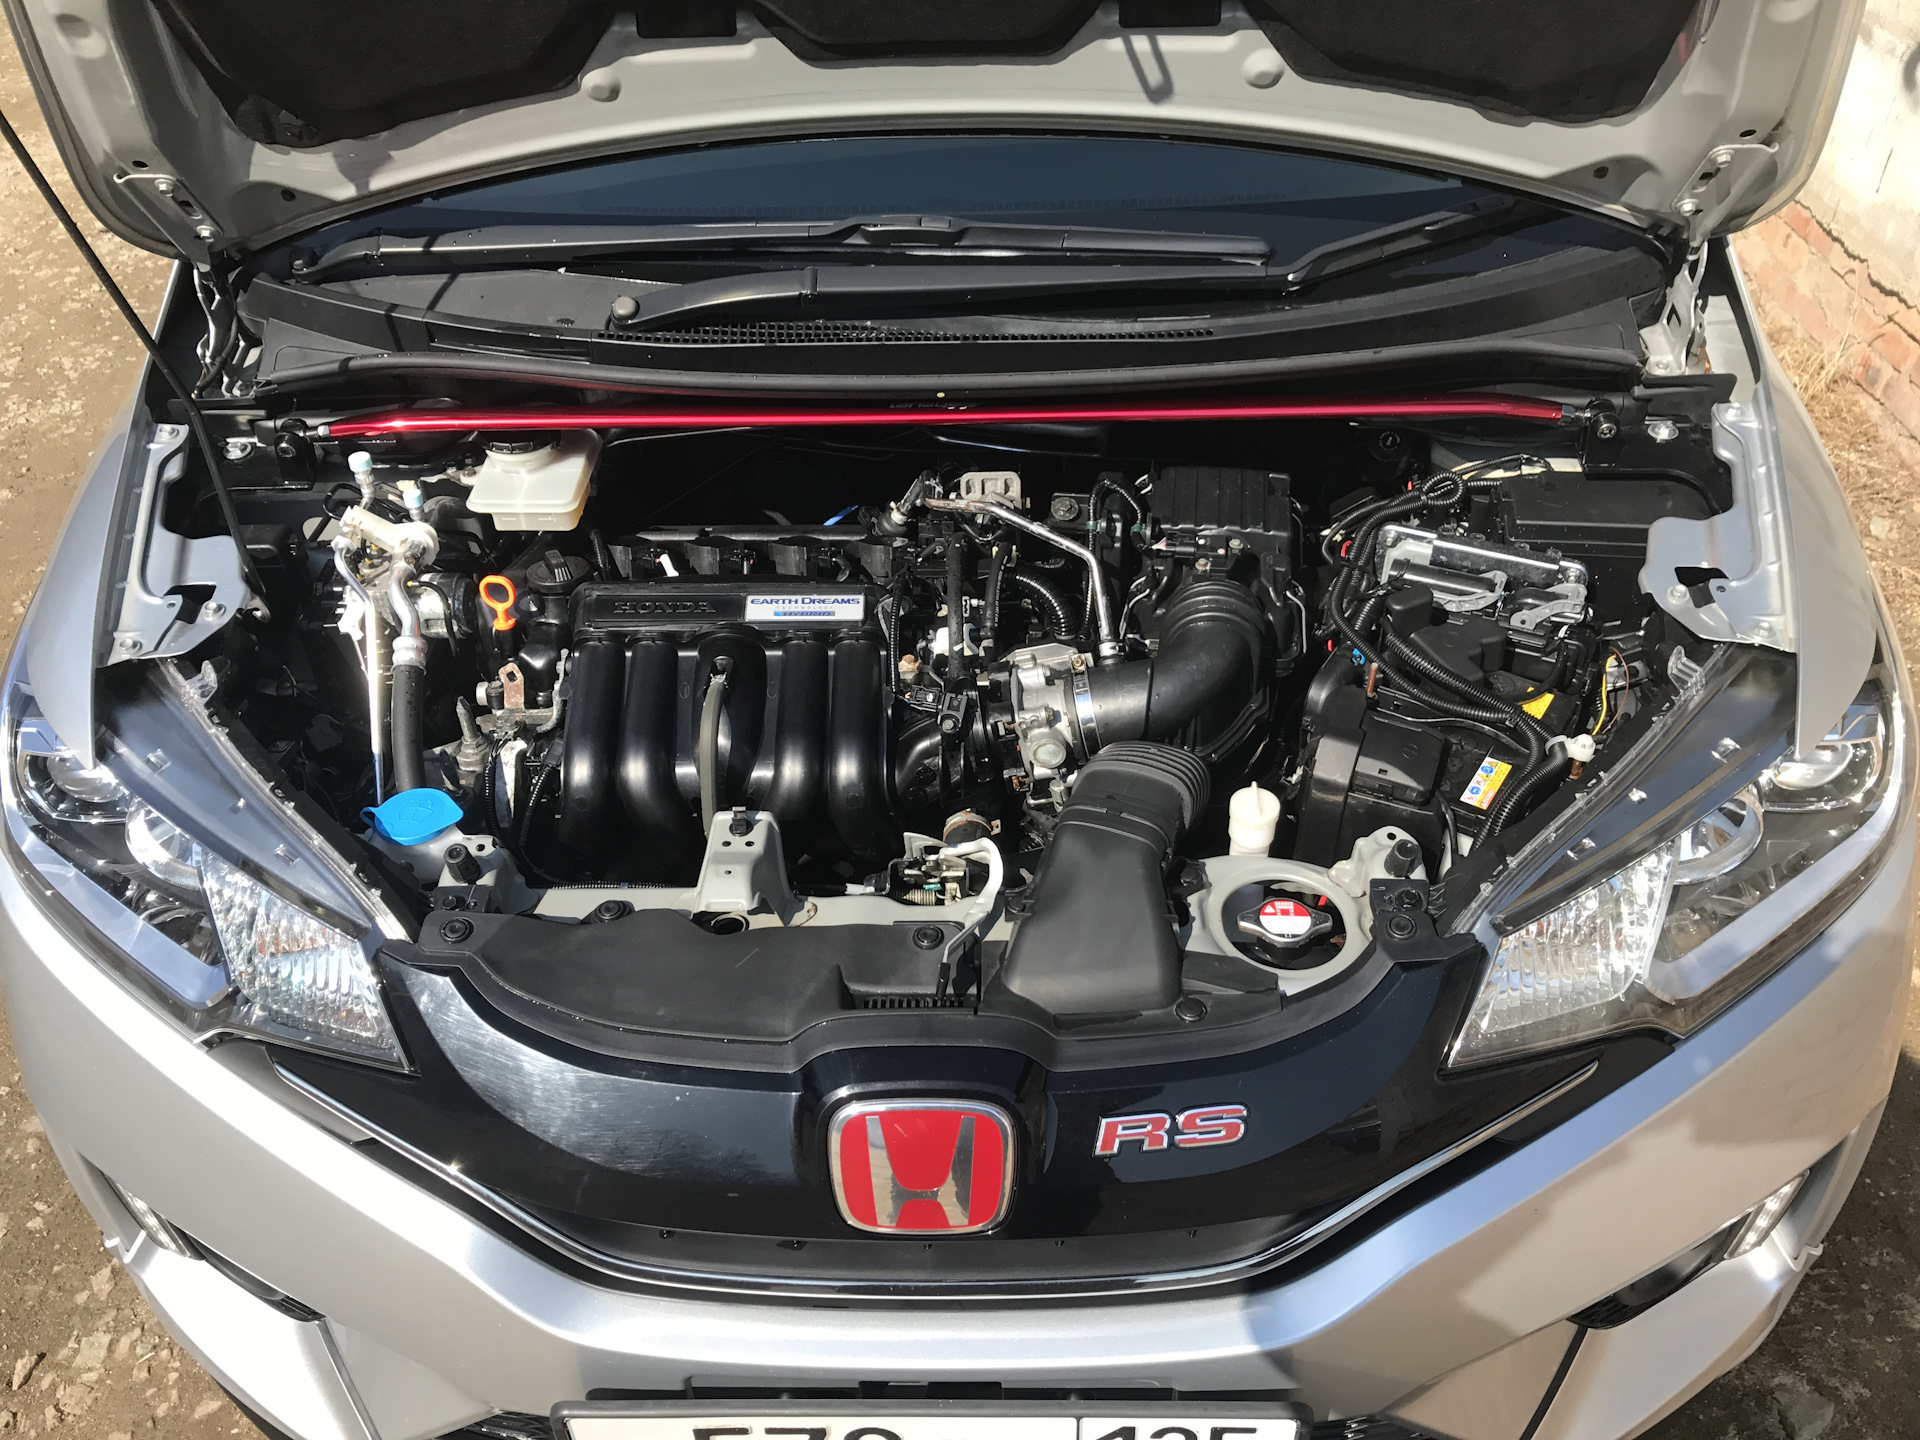 Аккумулятор на хонду фит. Honda Fit Hybrid 2011 Battery. Honda Fit 2016 аккумулятор. Honda Fit 2014 под капотом. Под капотом Honda Fit 2016.